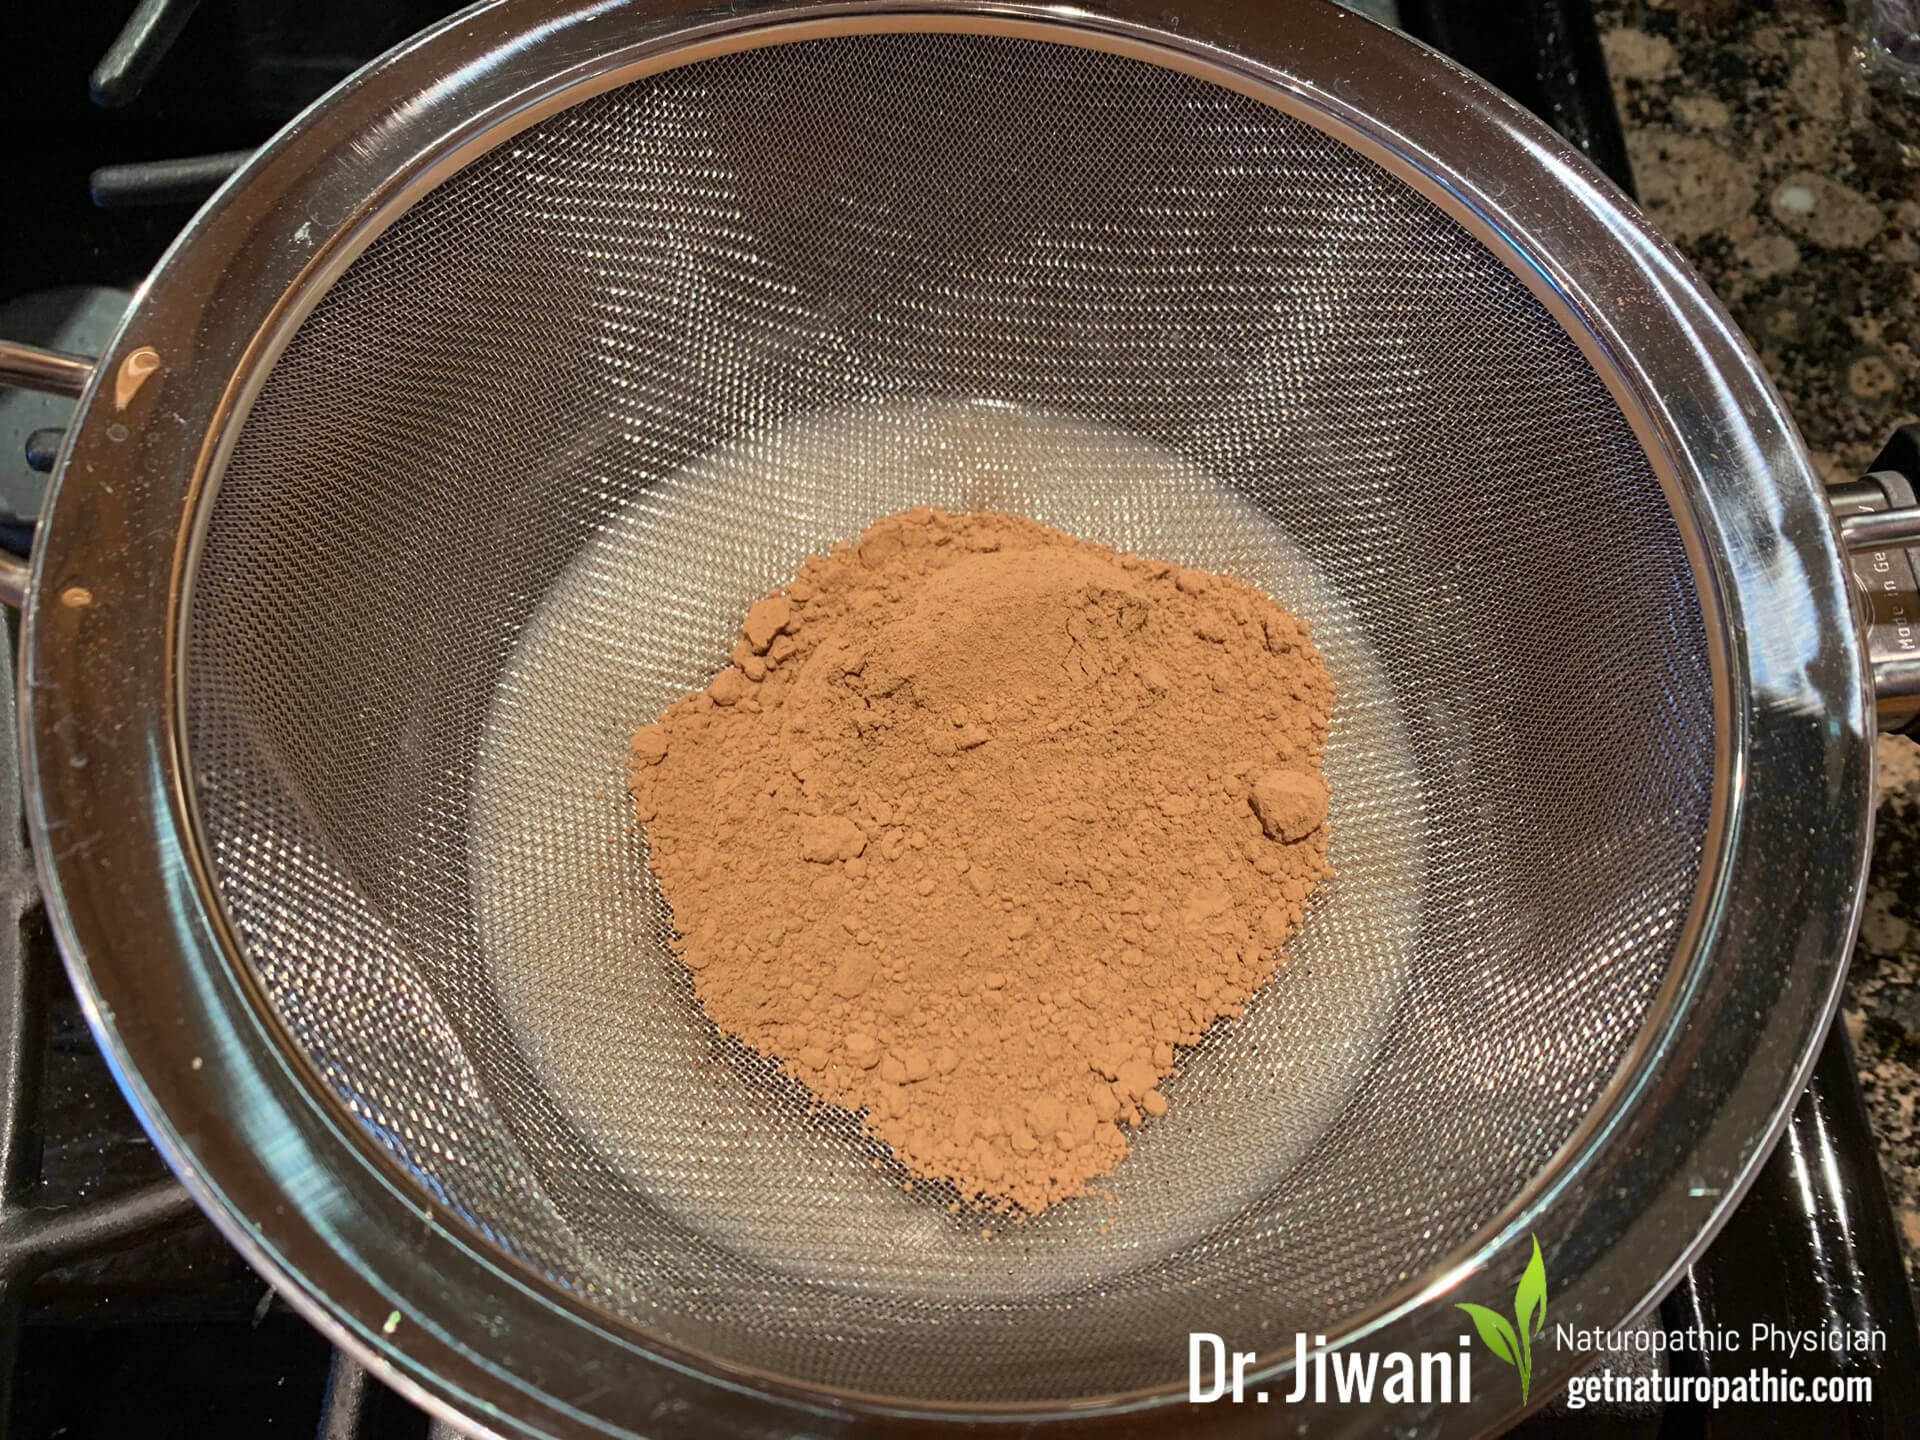 DrJiwani Keto Chocolate Fudge (Low Carb Dairy-Free) Recipe: Gluten-Free, Grain-Free, Egg-Free, Dairy-Free, Corn-Free, Soy-Free, Sugar-Free, Ideal For Diabetic, Paleo, Keto, Vegan & Candida Diets | Dr. Jiwani's Naturopathic Nuggets Blog